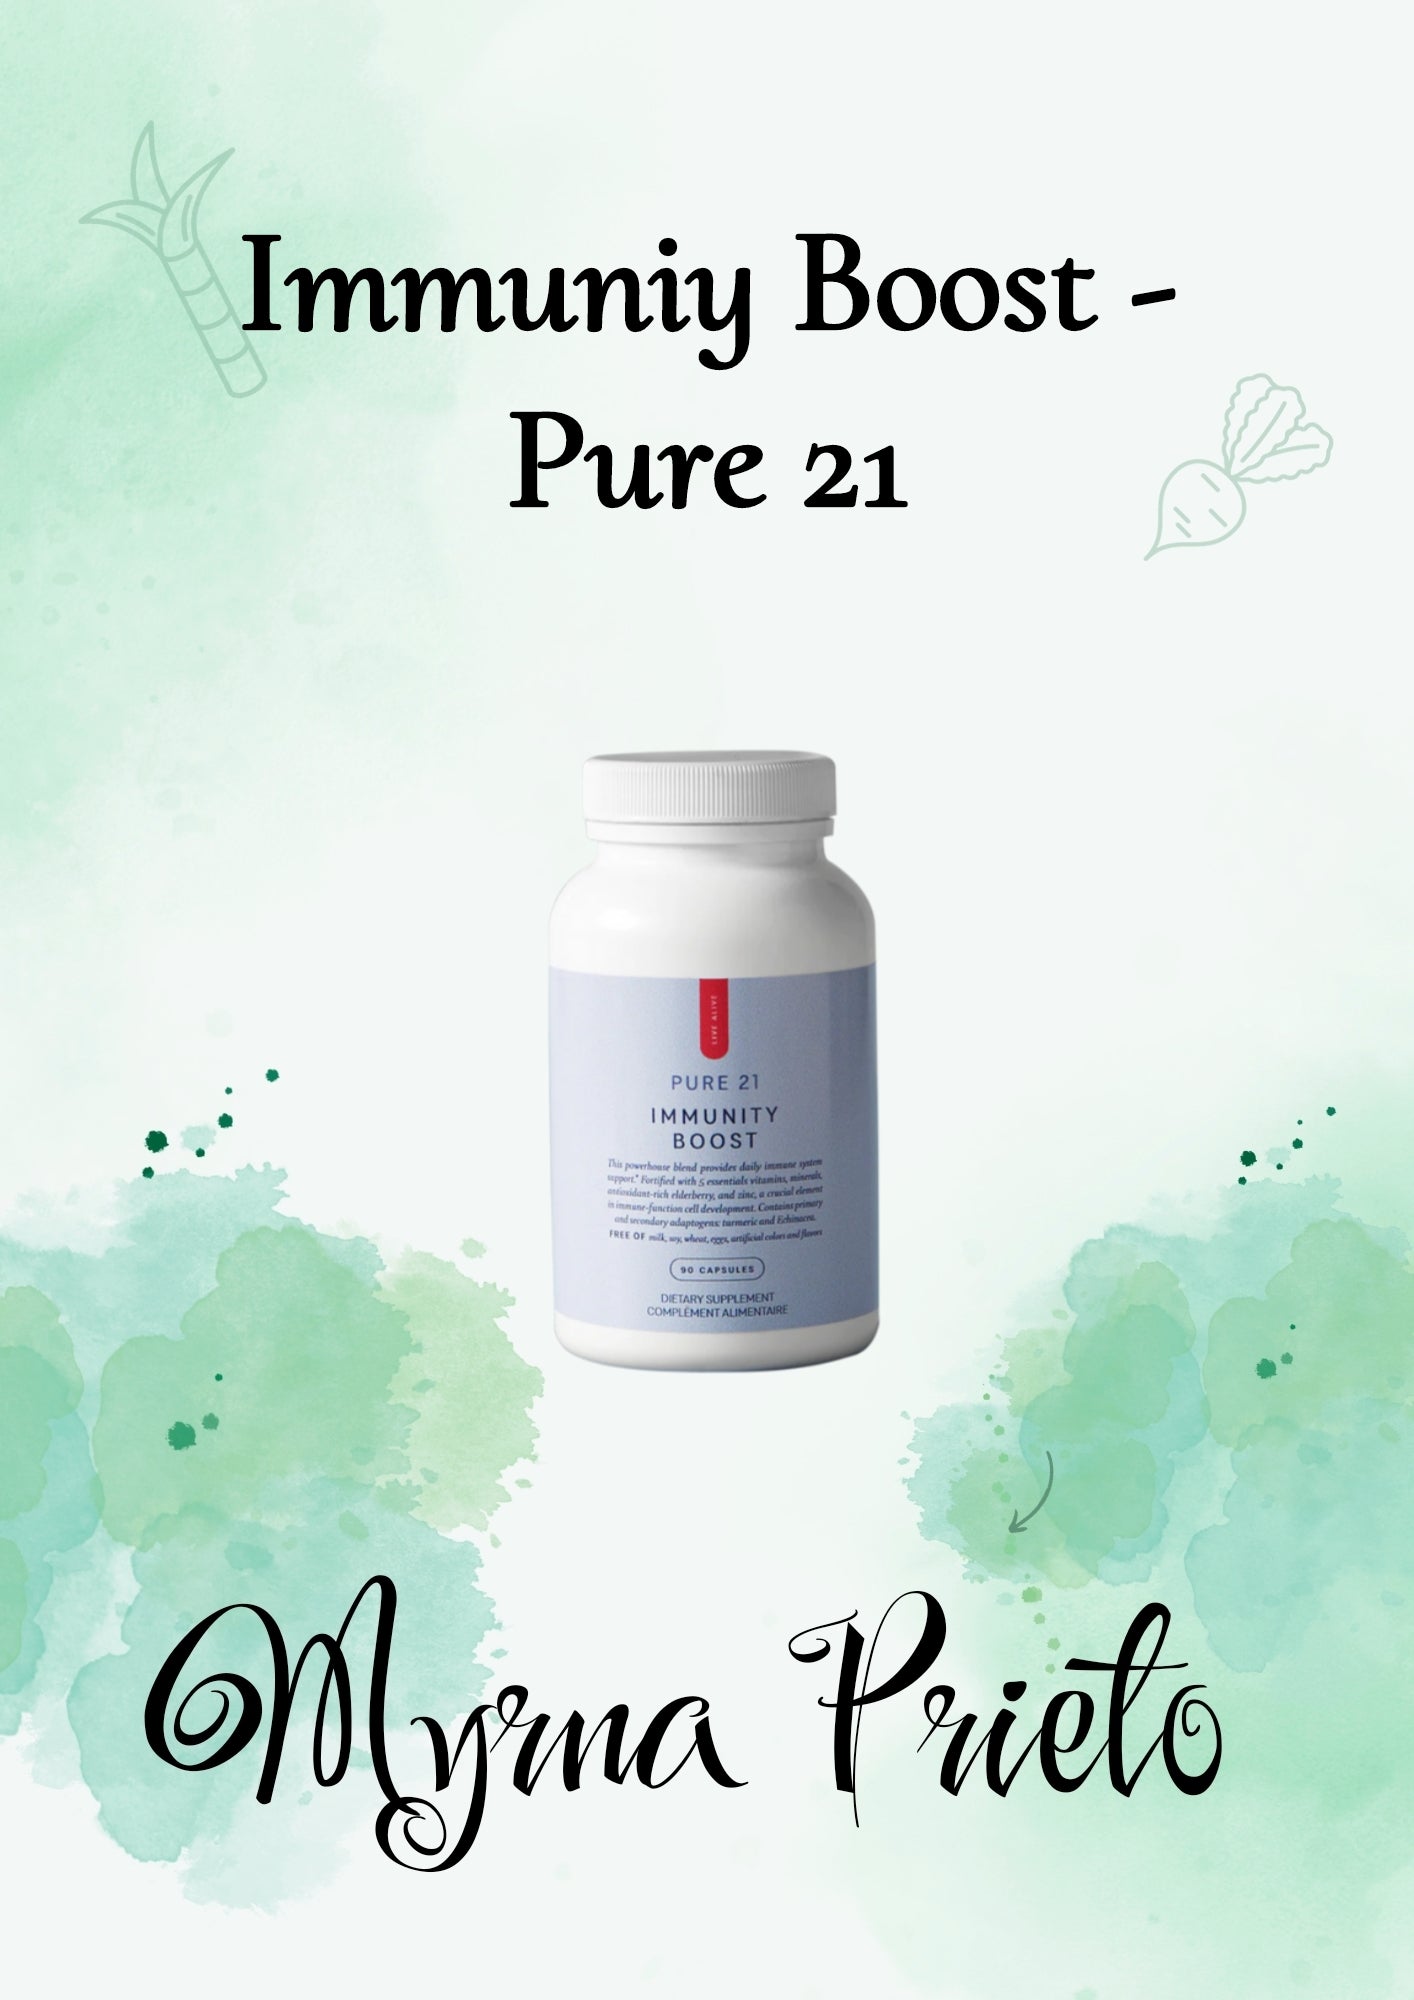 Immuniy Boost - Pure 21